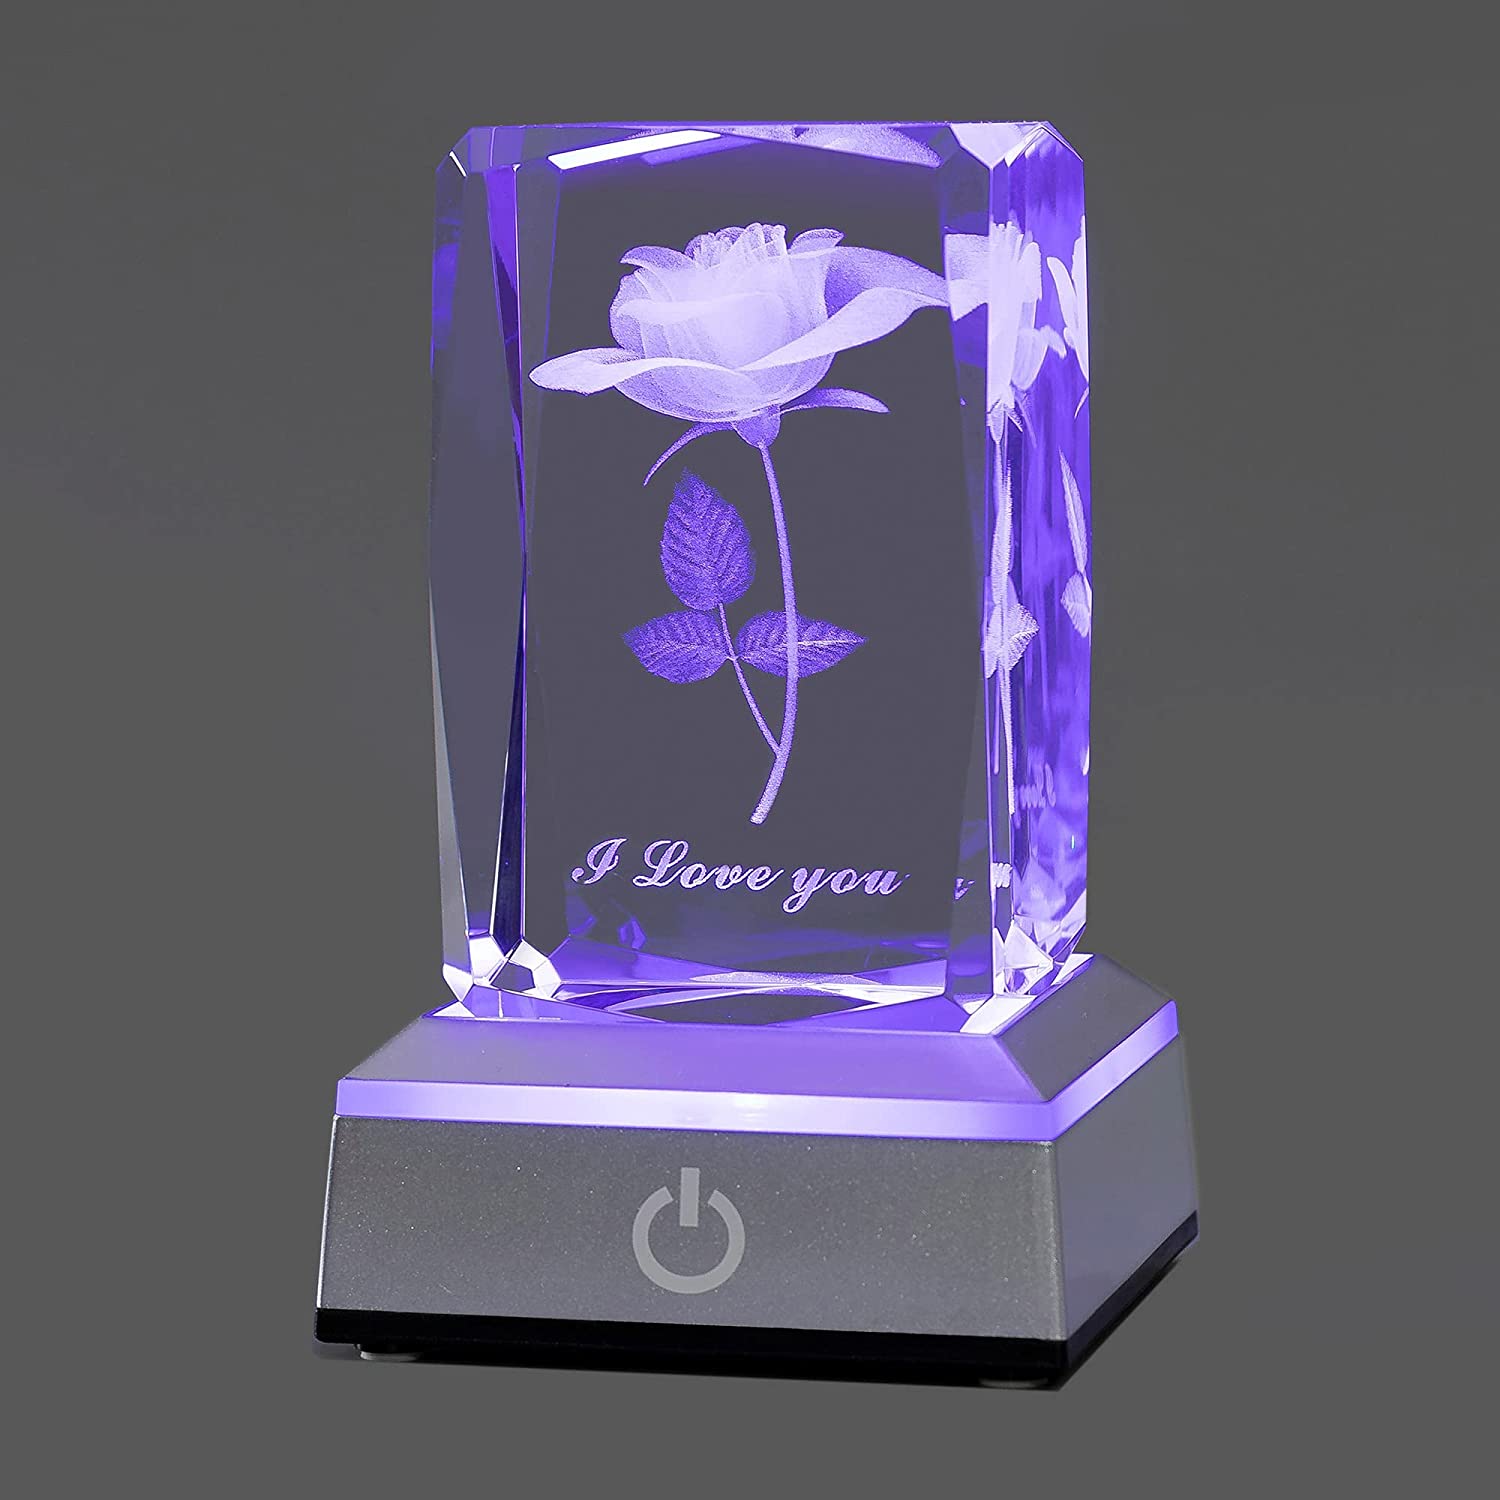 hochance 3D Rose Crystal Decolamp